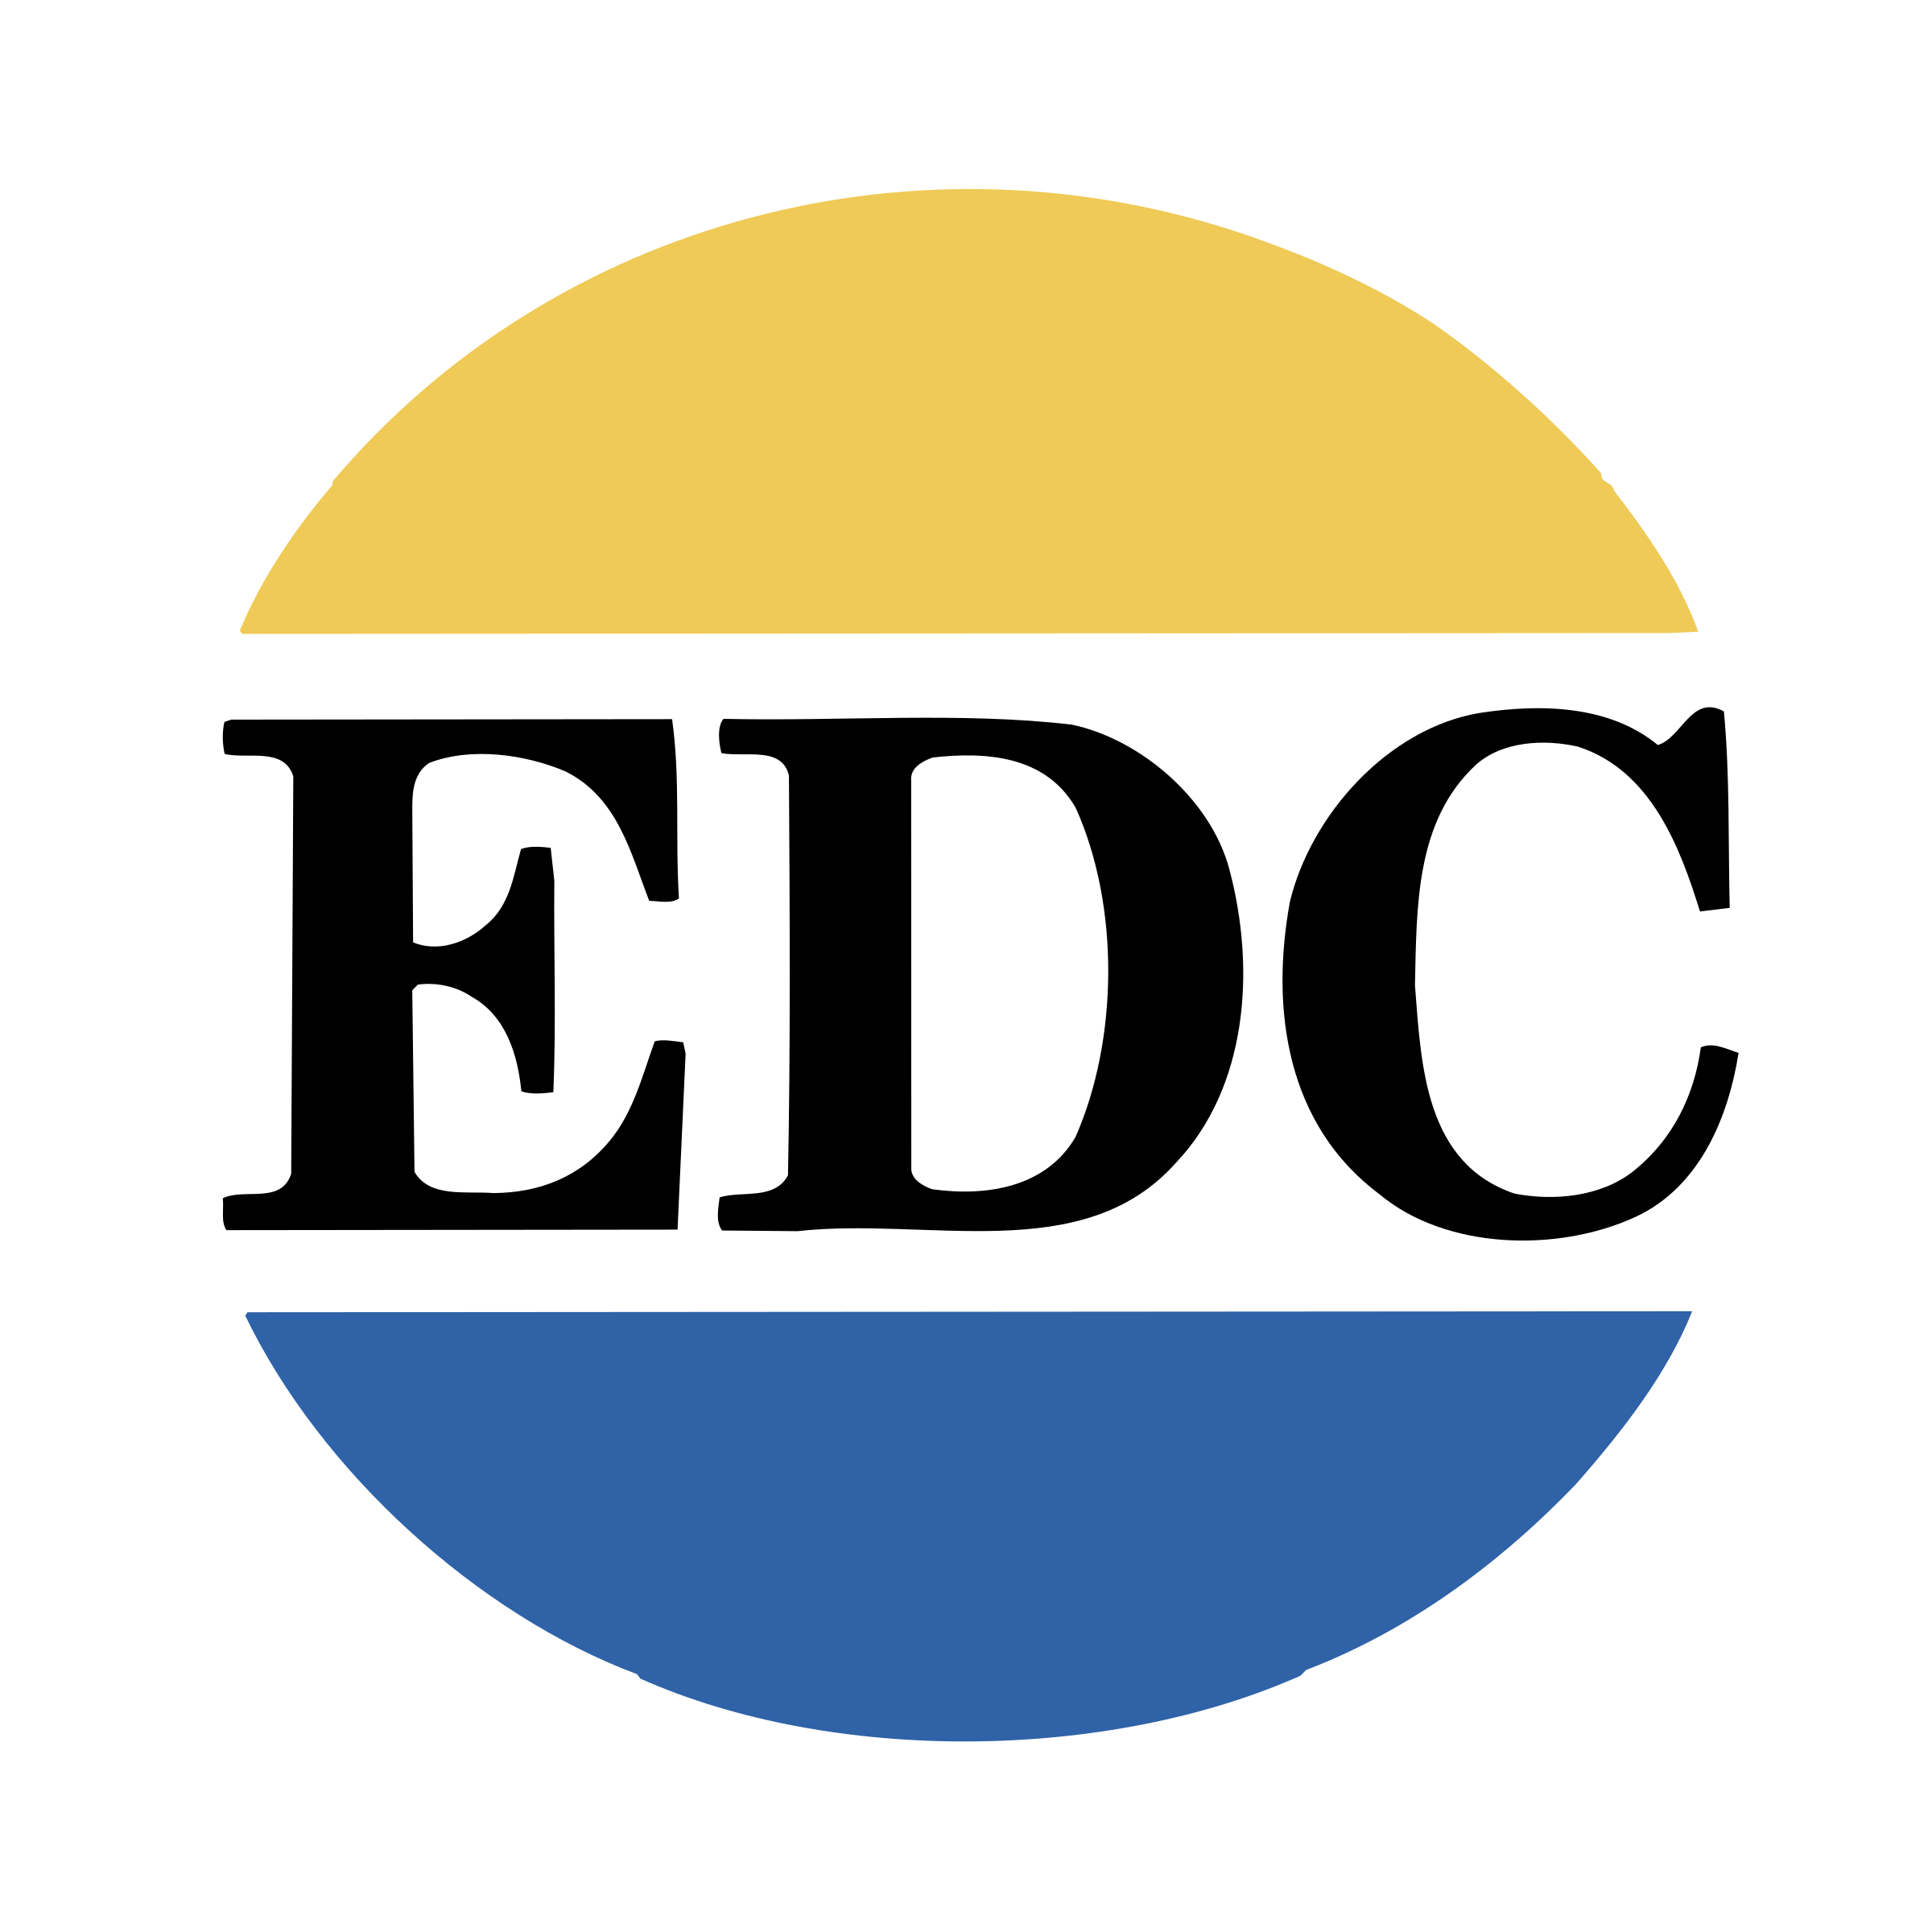 EDC Logo - EDC Logo PNG Transparent & SVG Vector - Freebie Supply